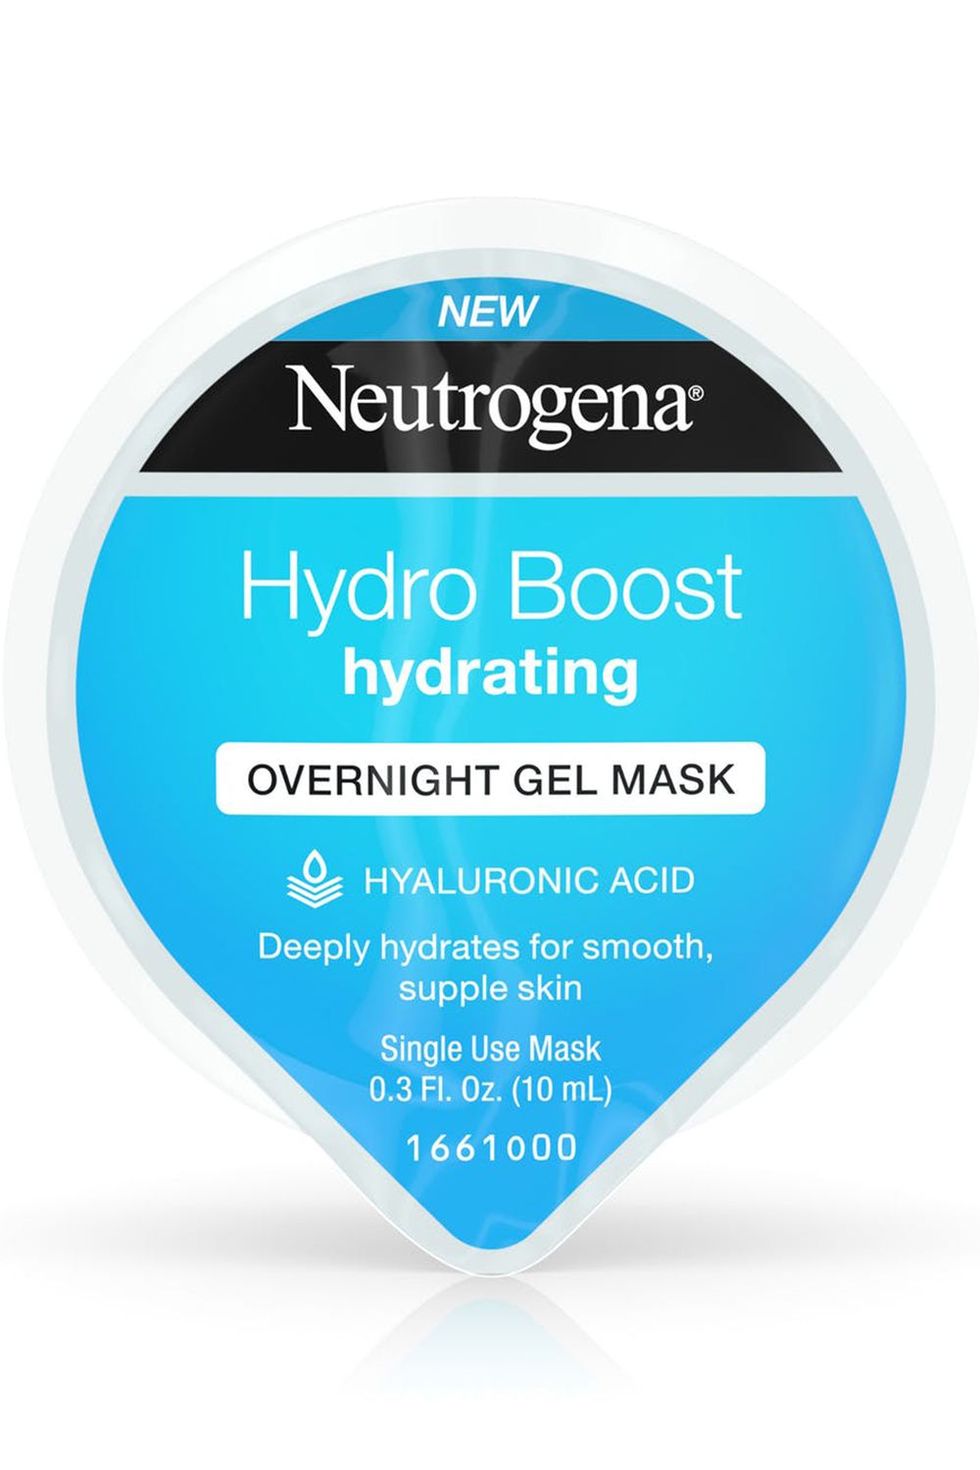 Neutrogena Hydro Boost Overnight Gel Mask